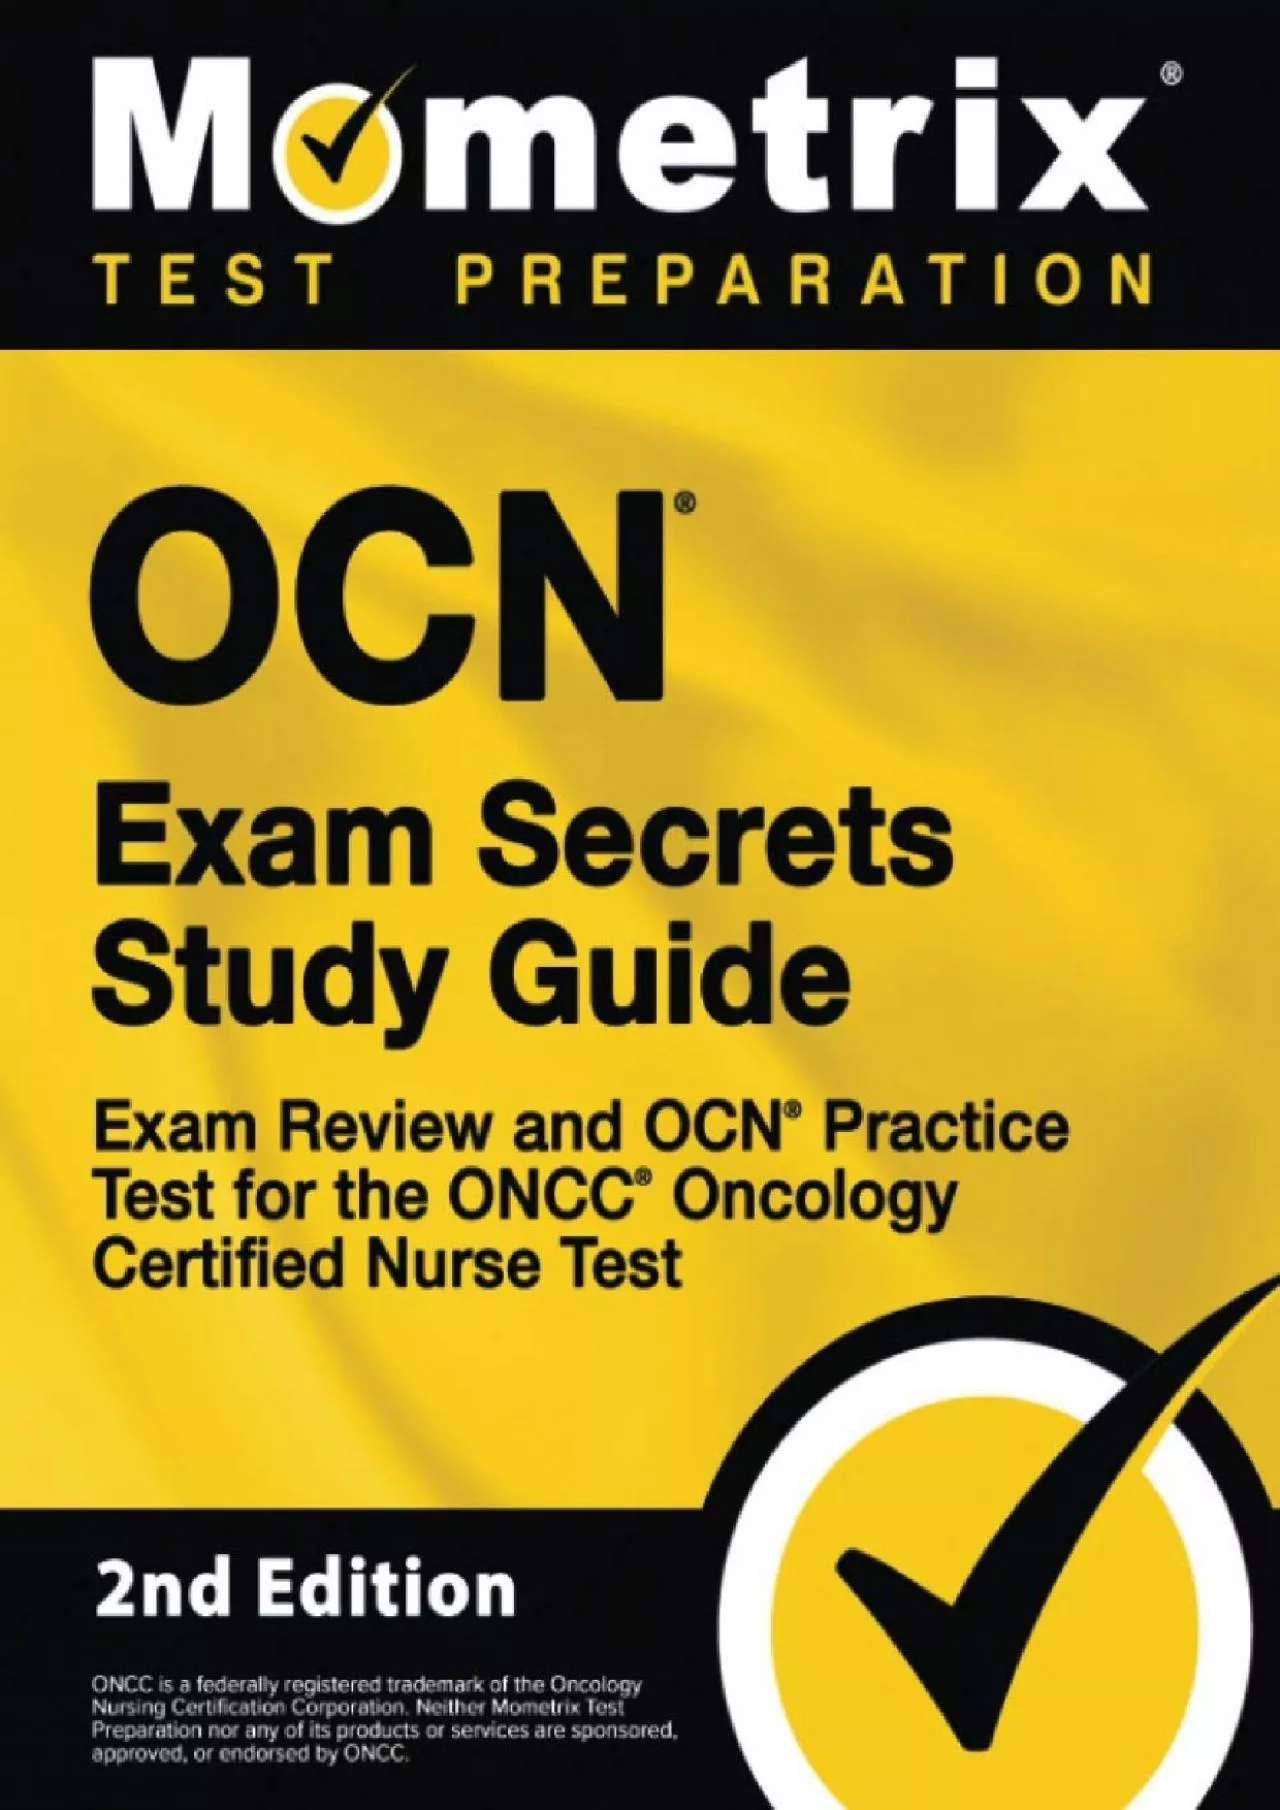 [EBOOK] OCN Exam Secrets Study Guide - Exam Review and OCN Practice Test for the ONCC